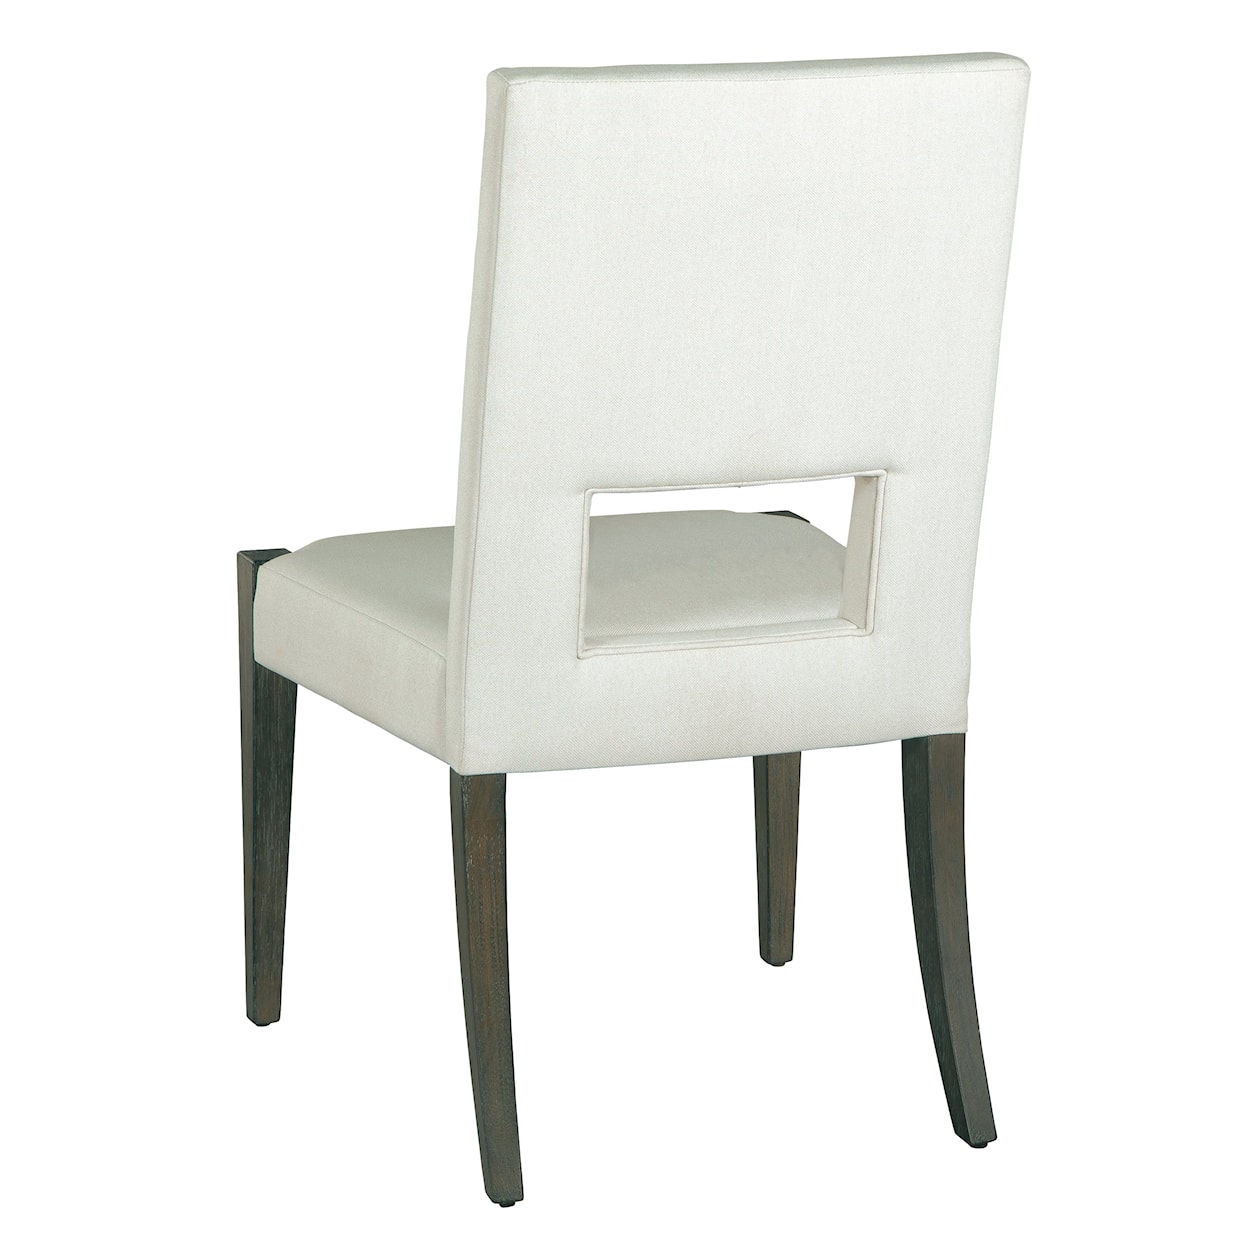 Hekman Edgewater Upholstered Side Chair